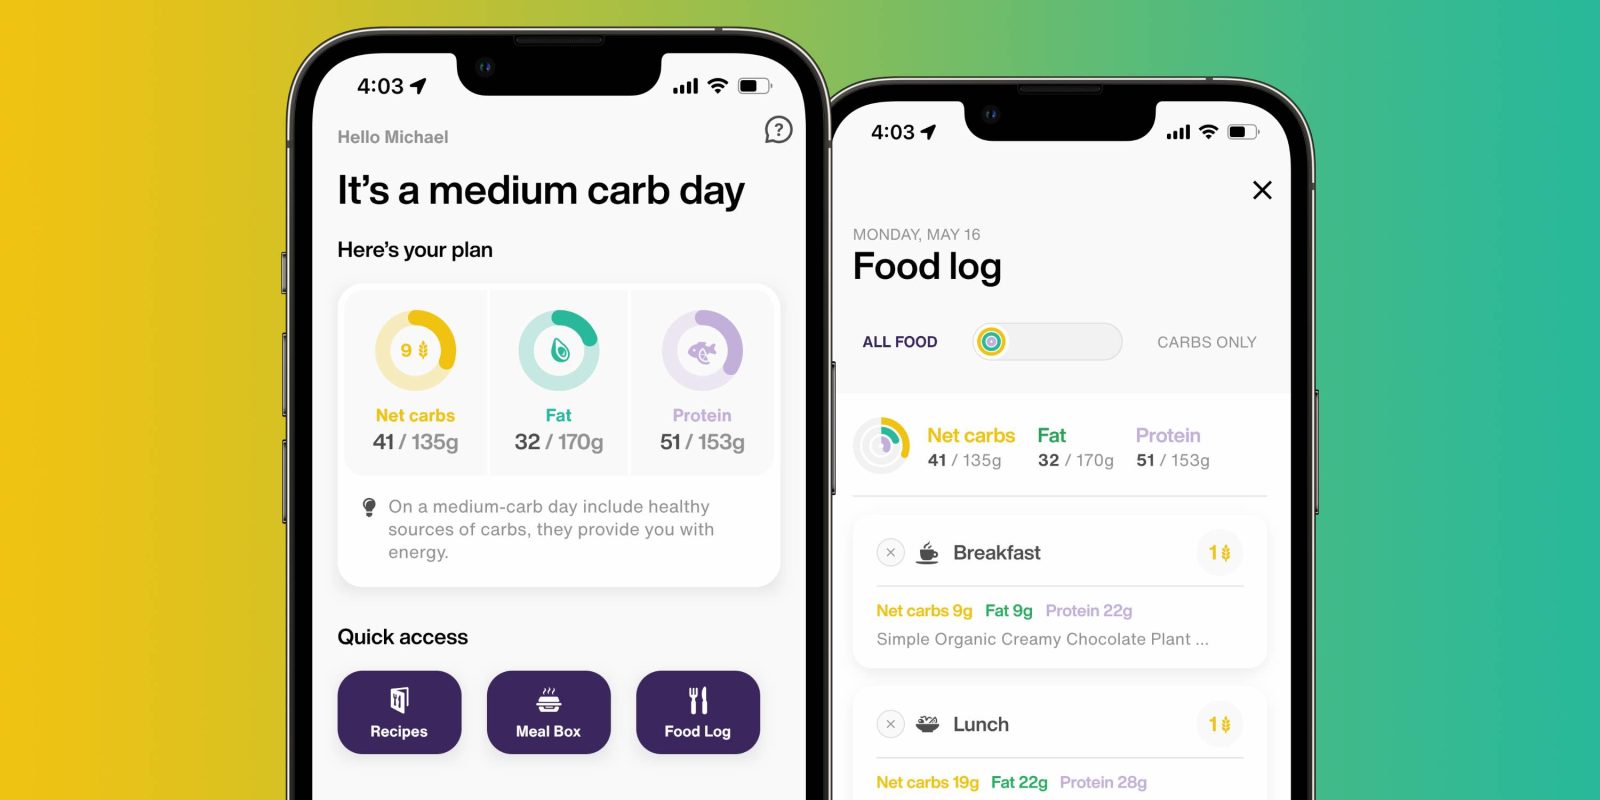 Lumen metabolic analyzer iOS app gets overhauled food logging and macro tracking